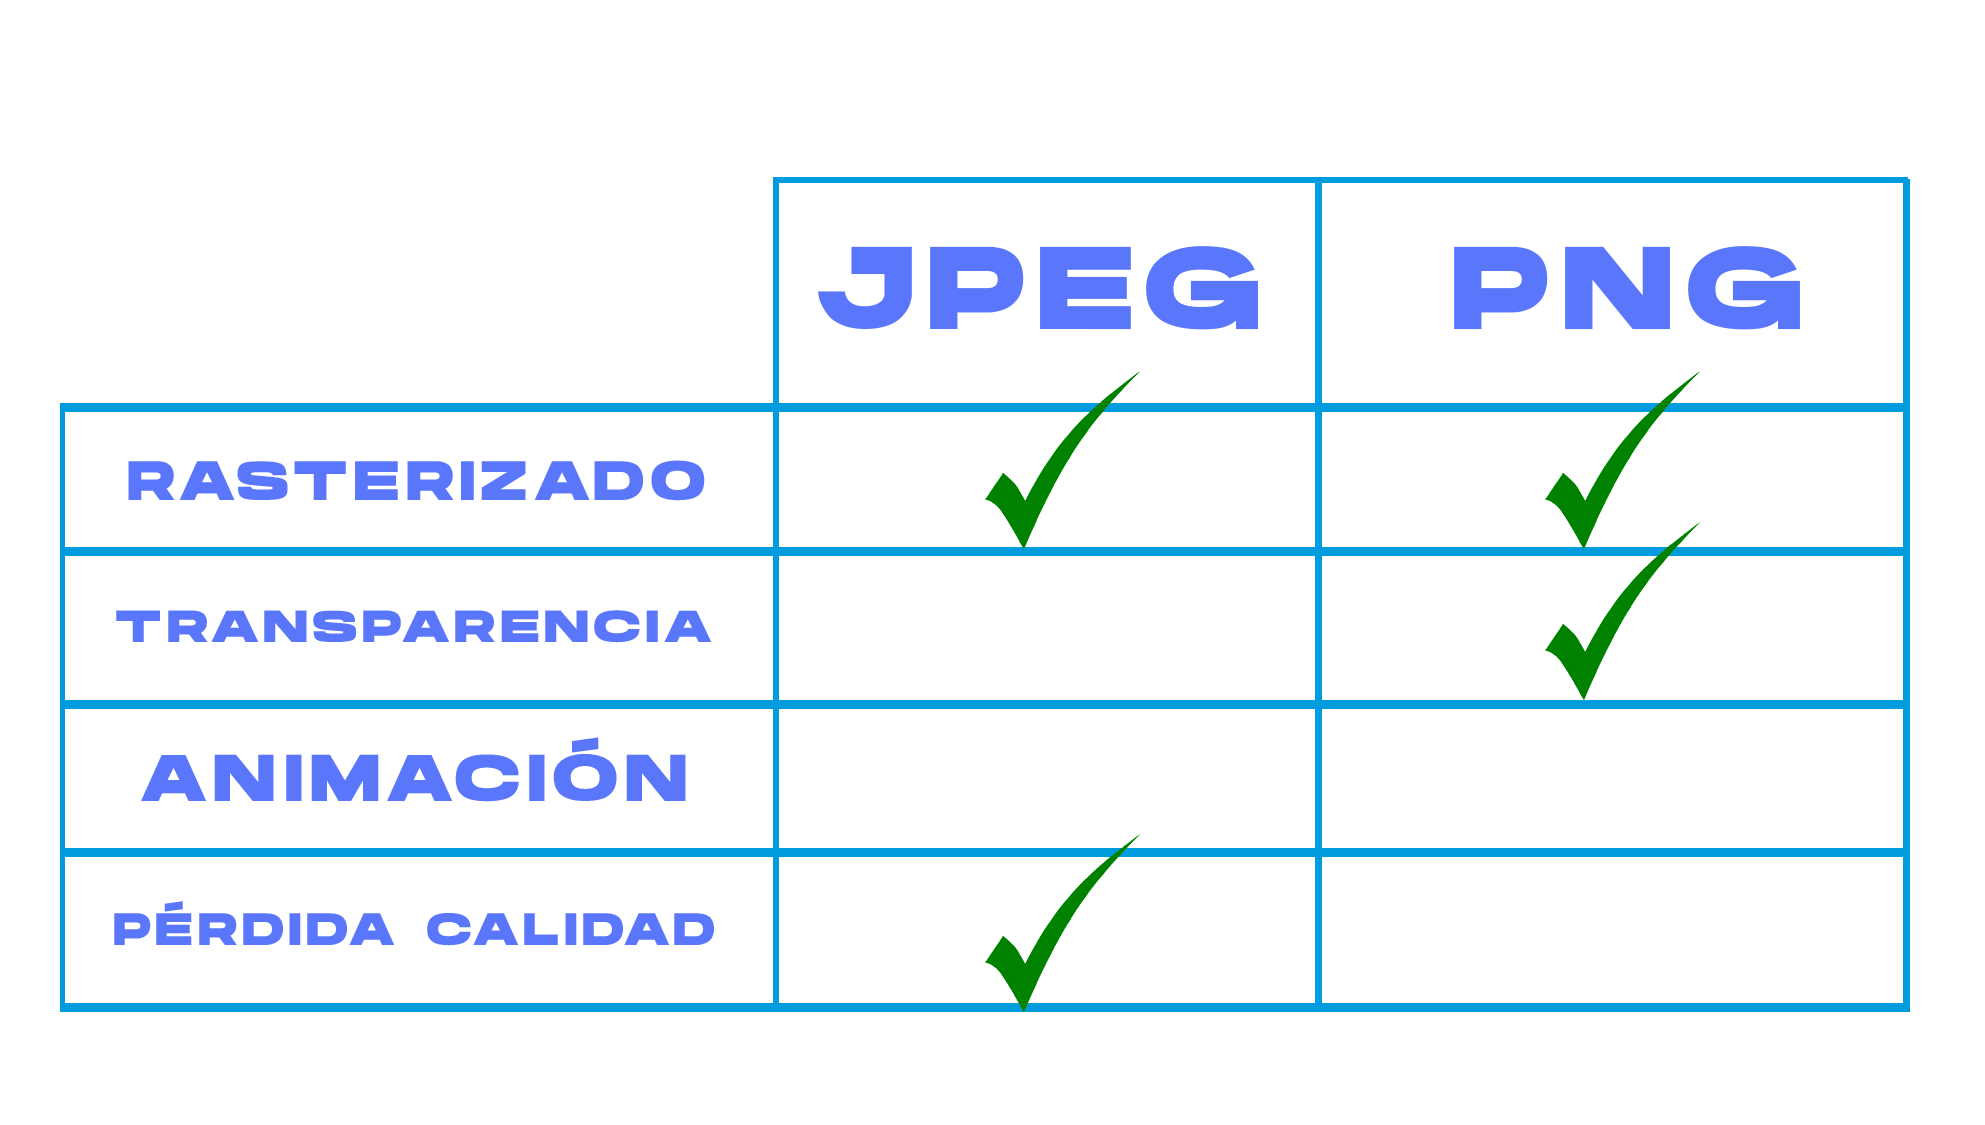 Jpeg vs Png Piano Marketing Granada